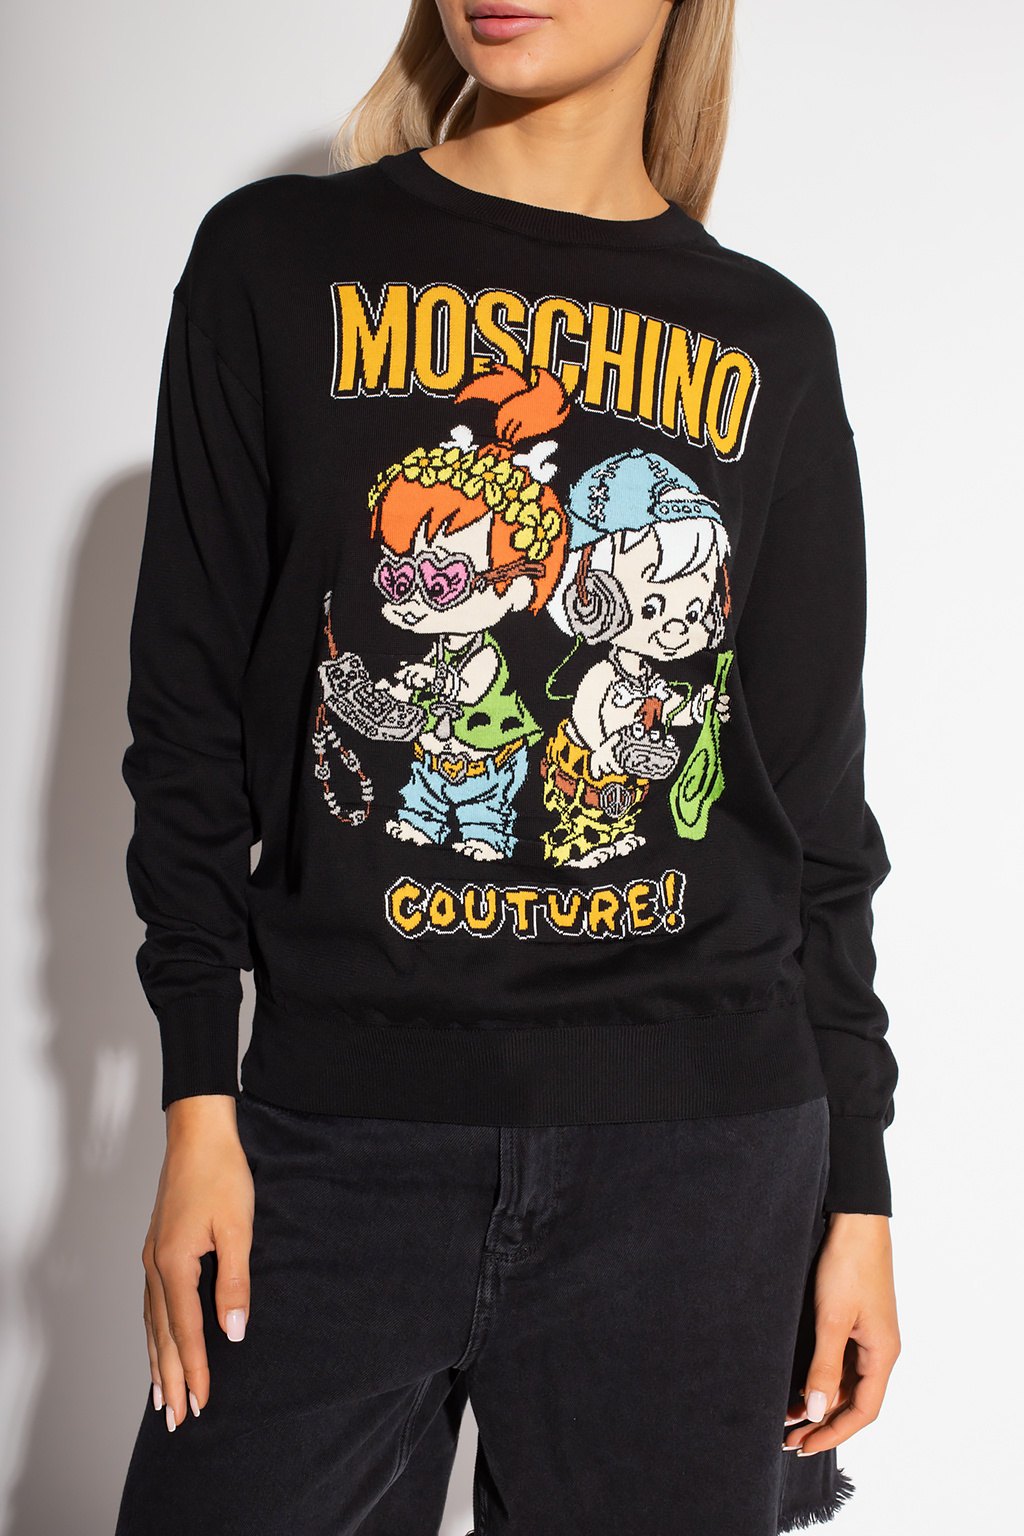 Moschino Moschino x The Flintstones™